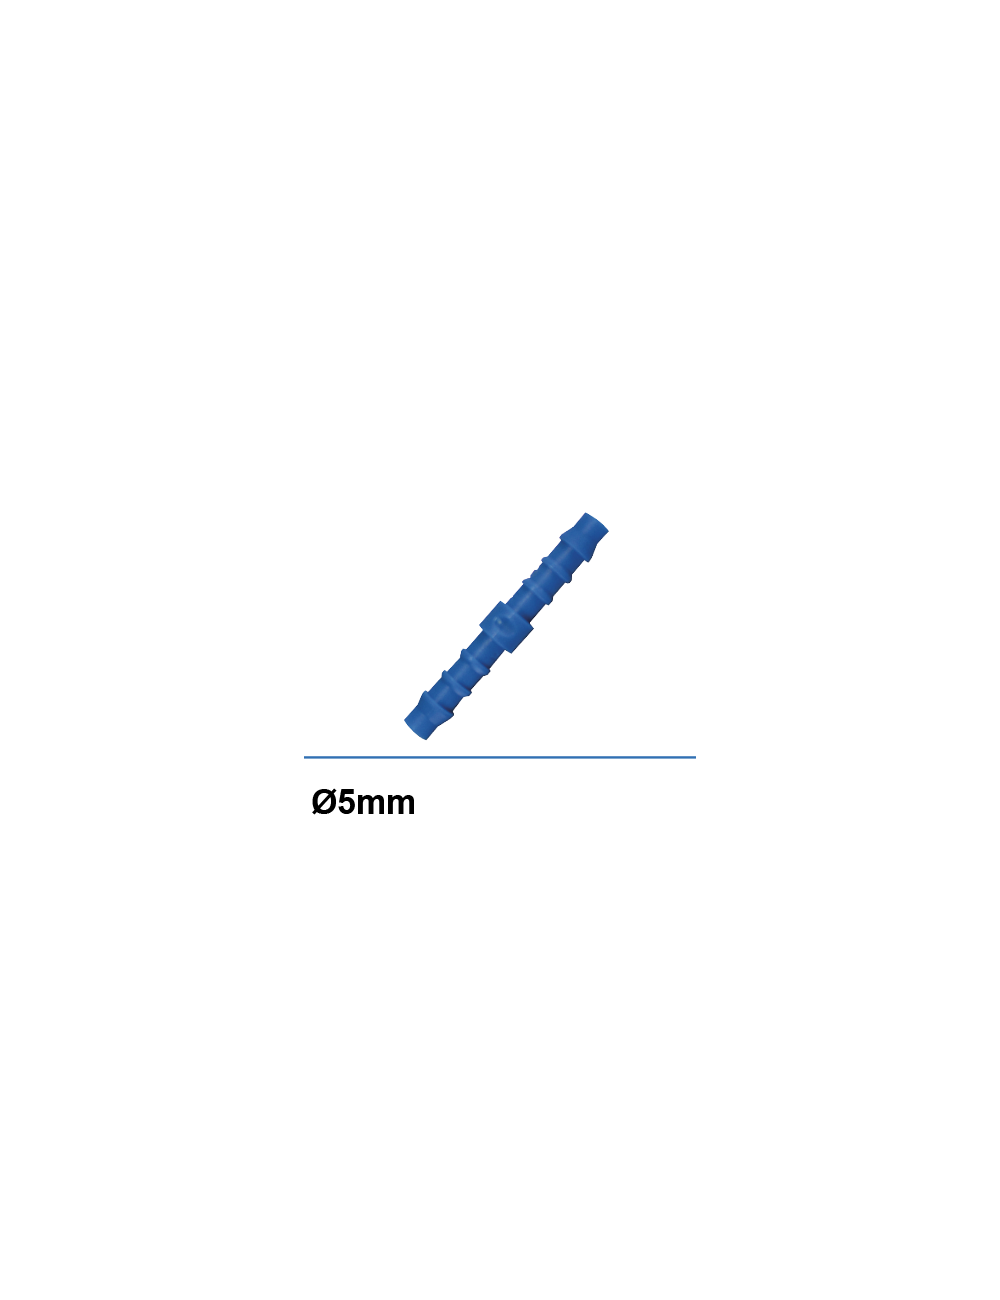 Accoupleur nylon 5mm